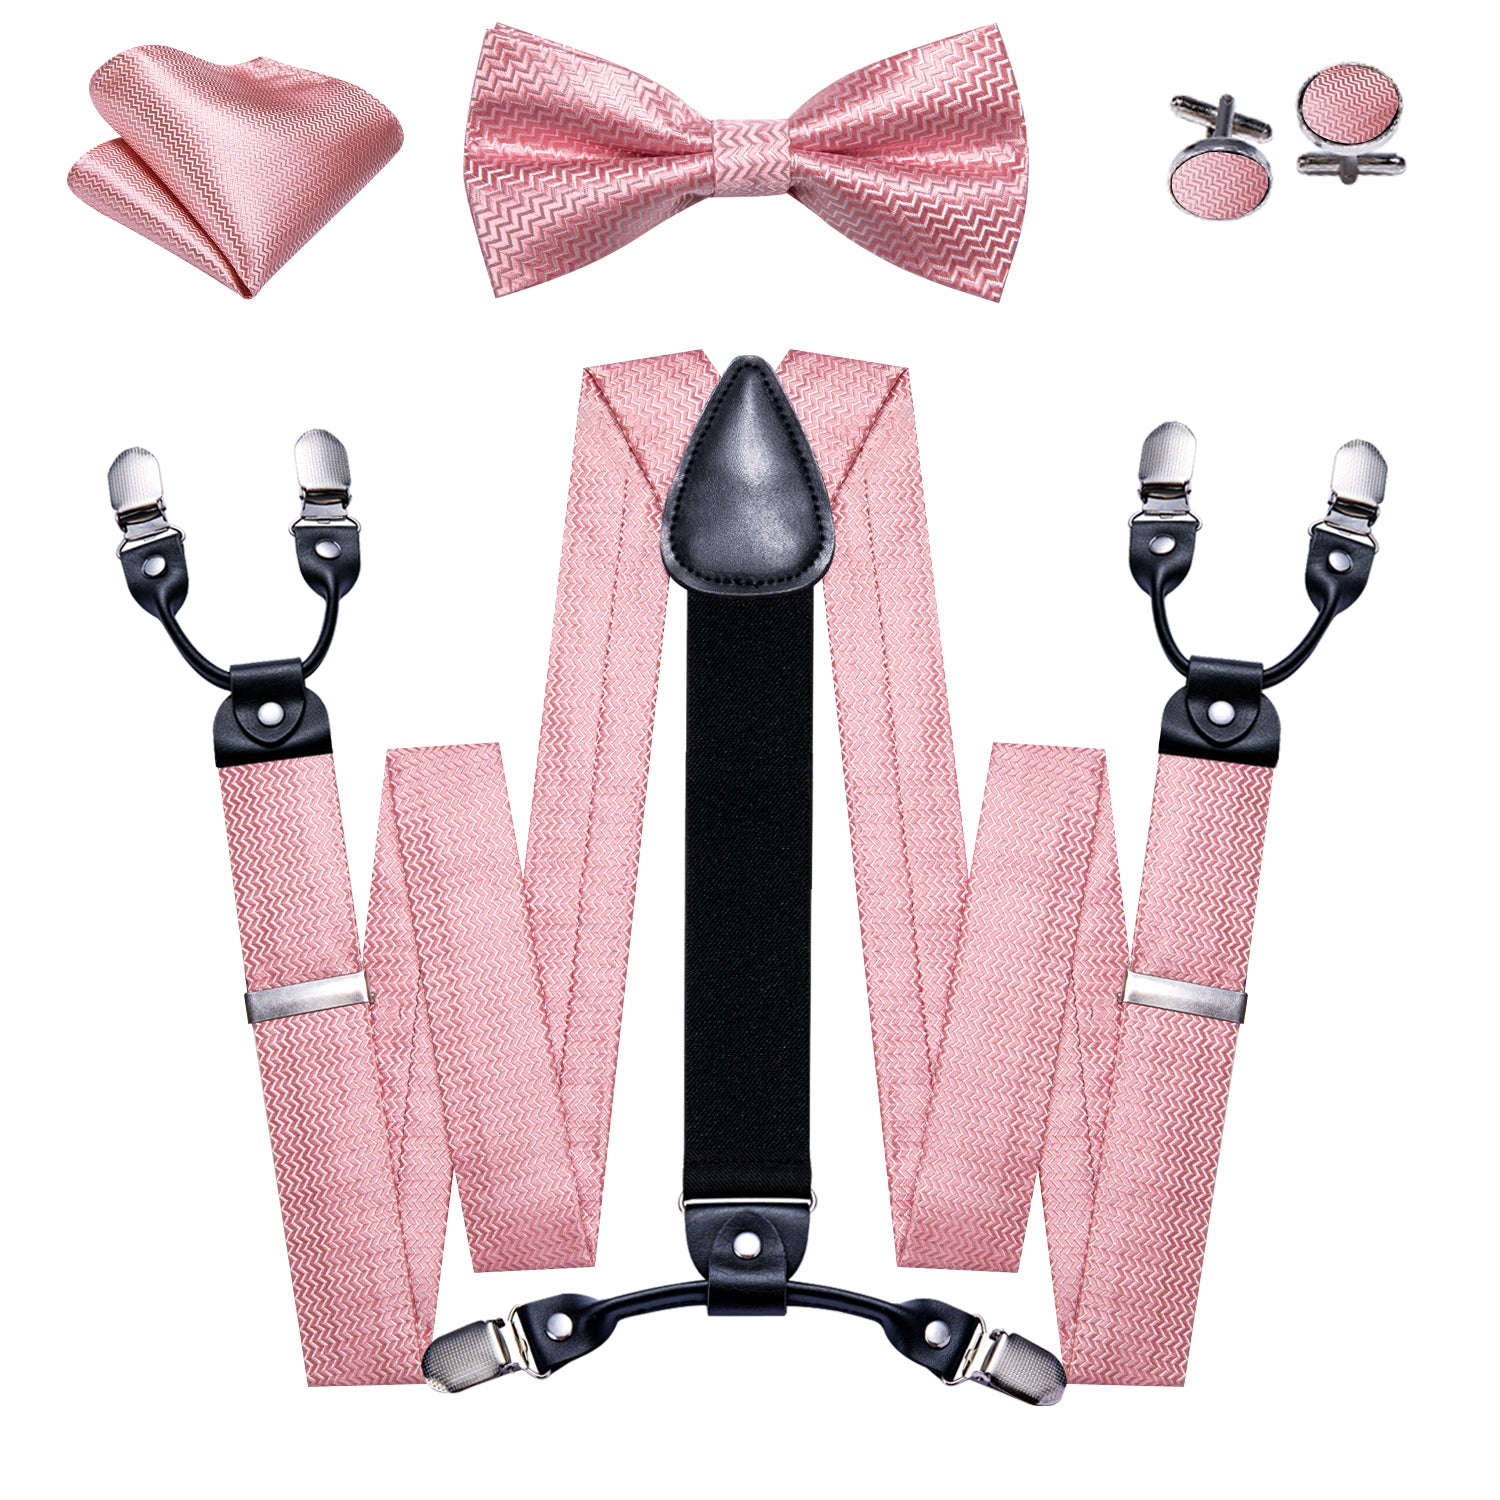 Barry.wang Men's Suspenders Pink Solid Y Back Adjustable Bow Tie Suspenders Set